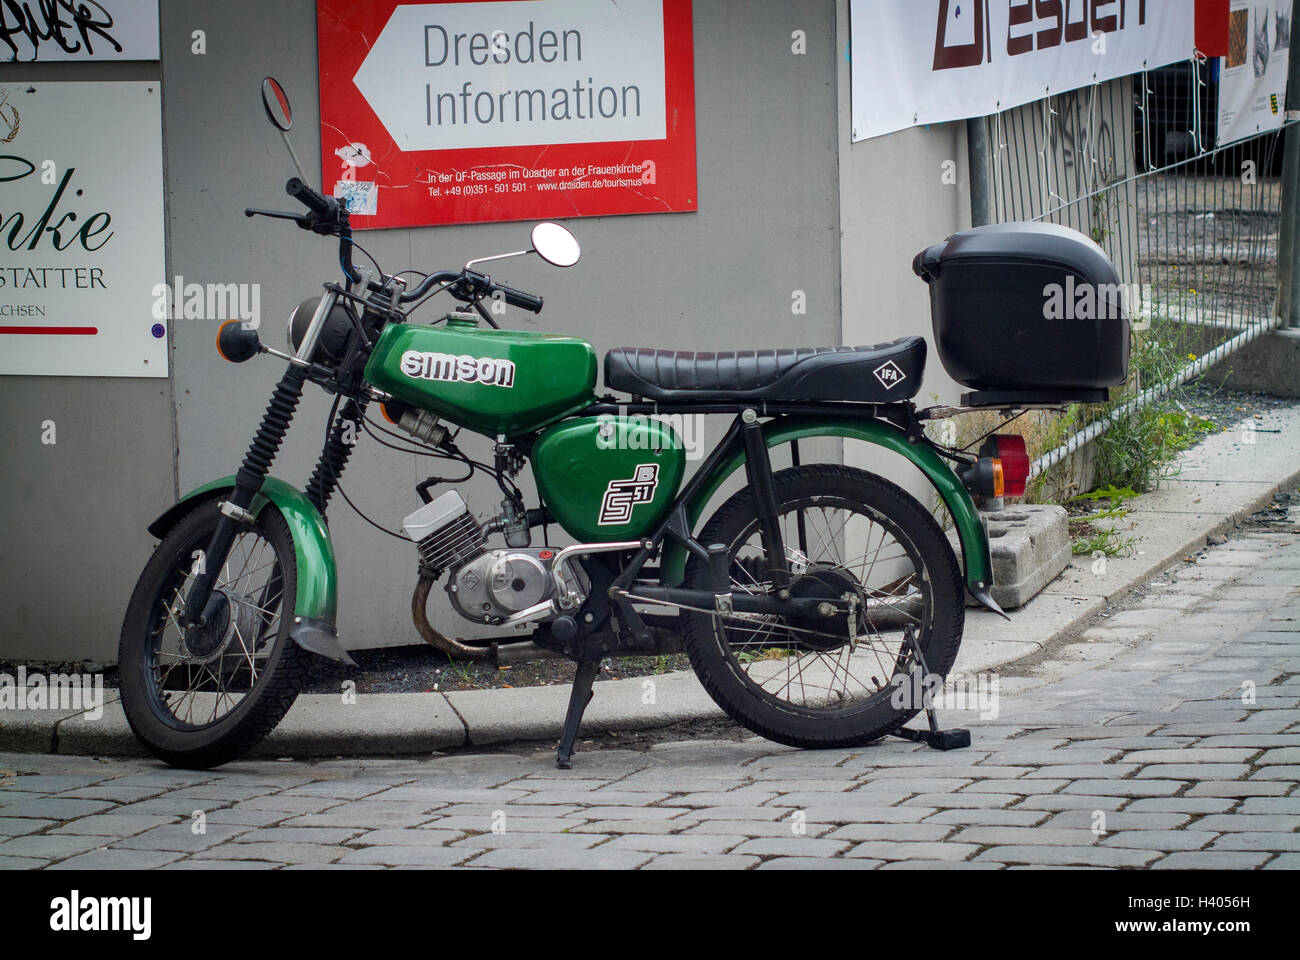 Simson Motorrad in Dresden, Deutschland Stockfotografie - Alamy